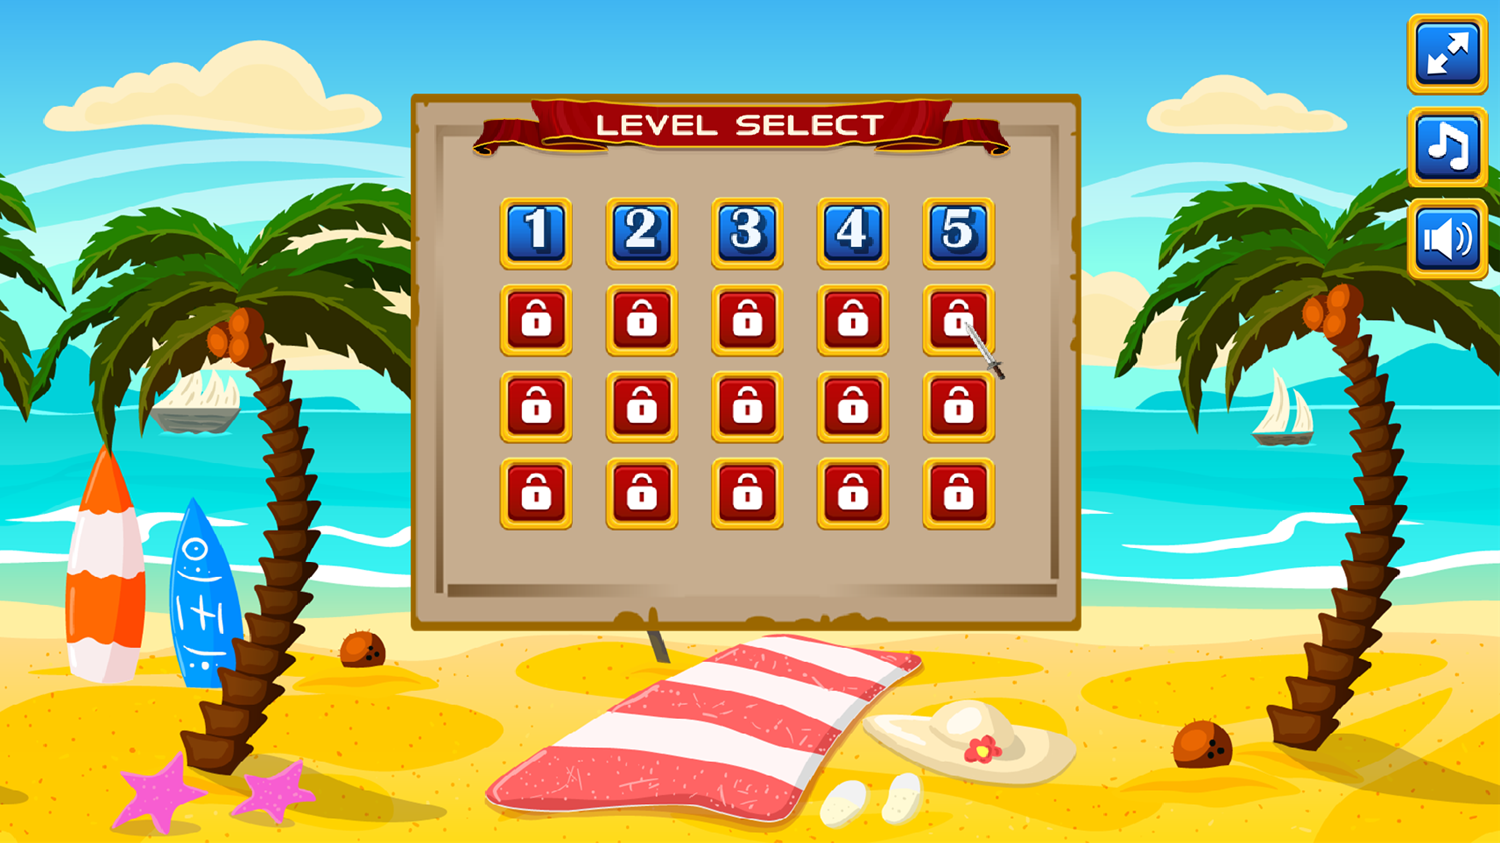 Beachball Fun Game Level Select Screenshot.